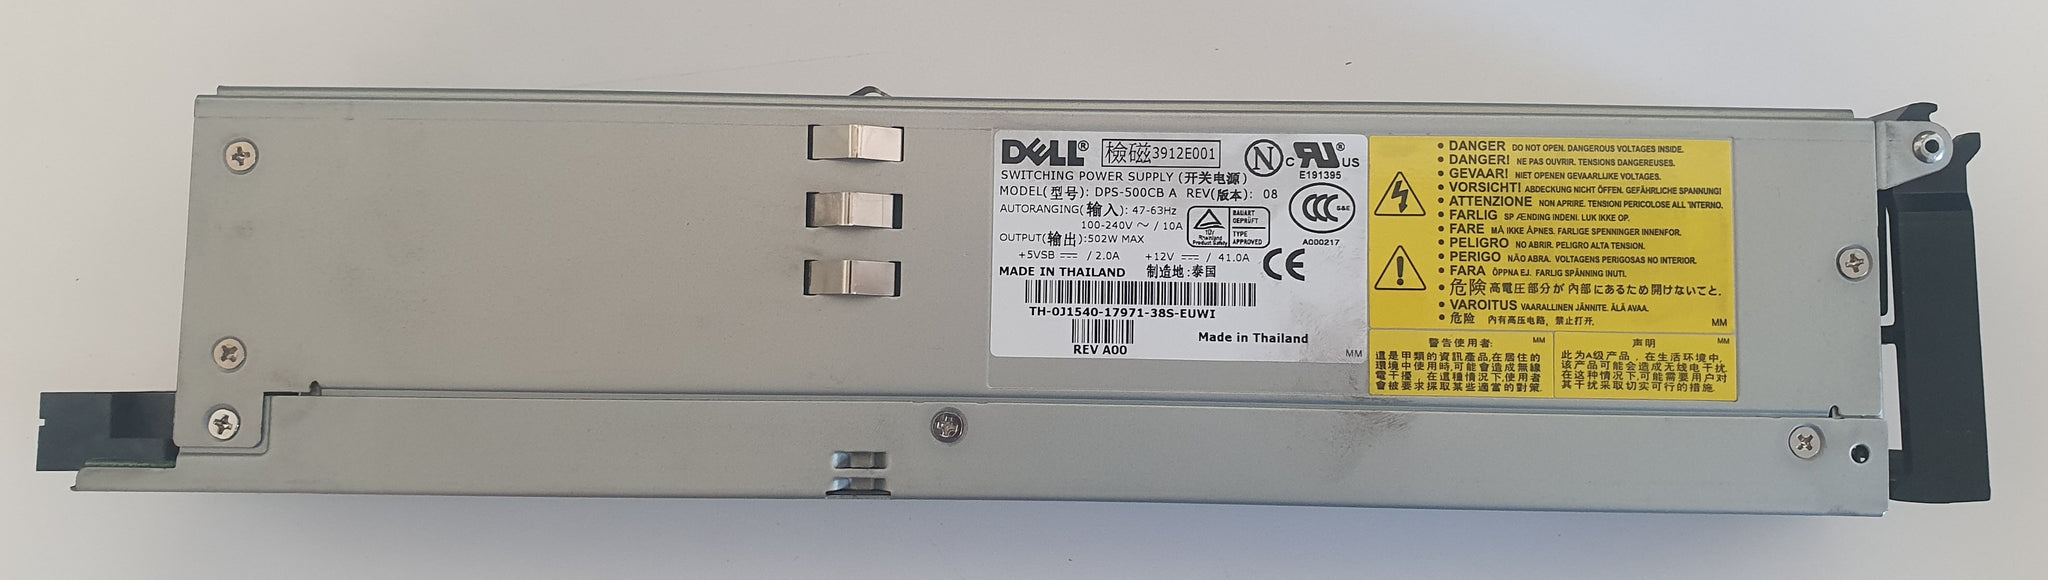 Dell PowerEdge 2650 - 500W Power Supply J1540